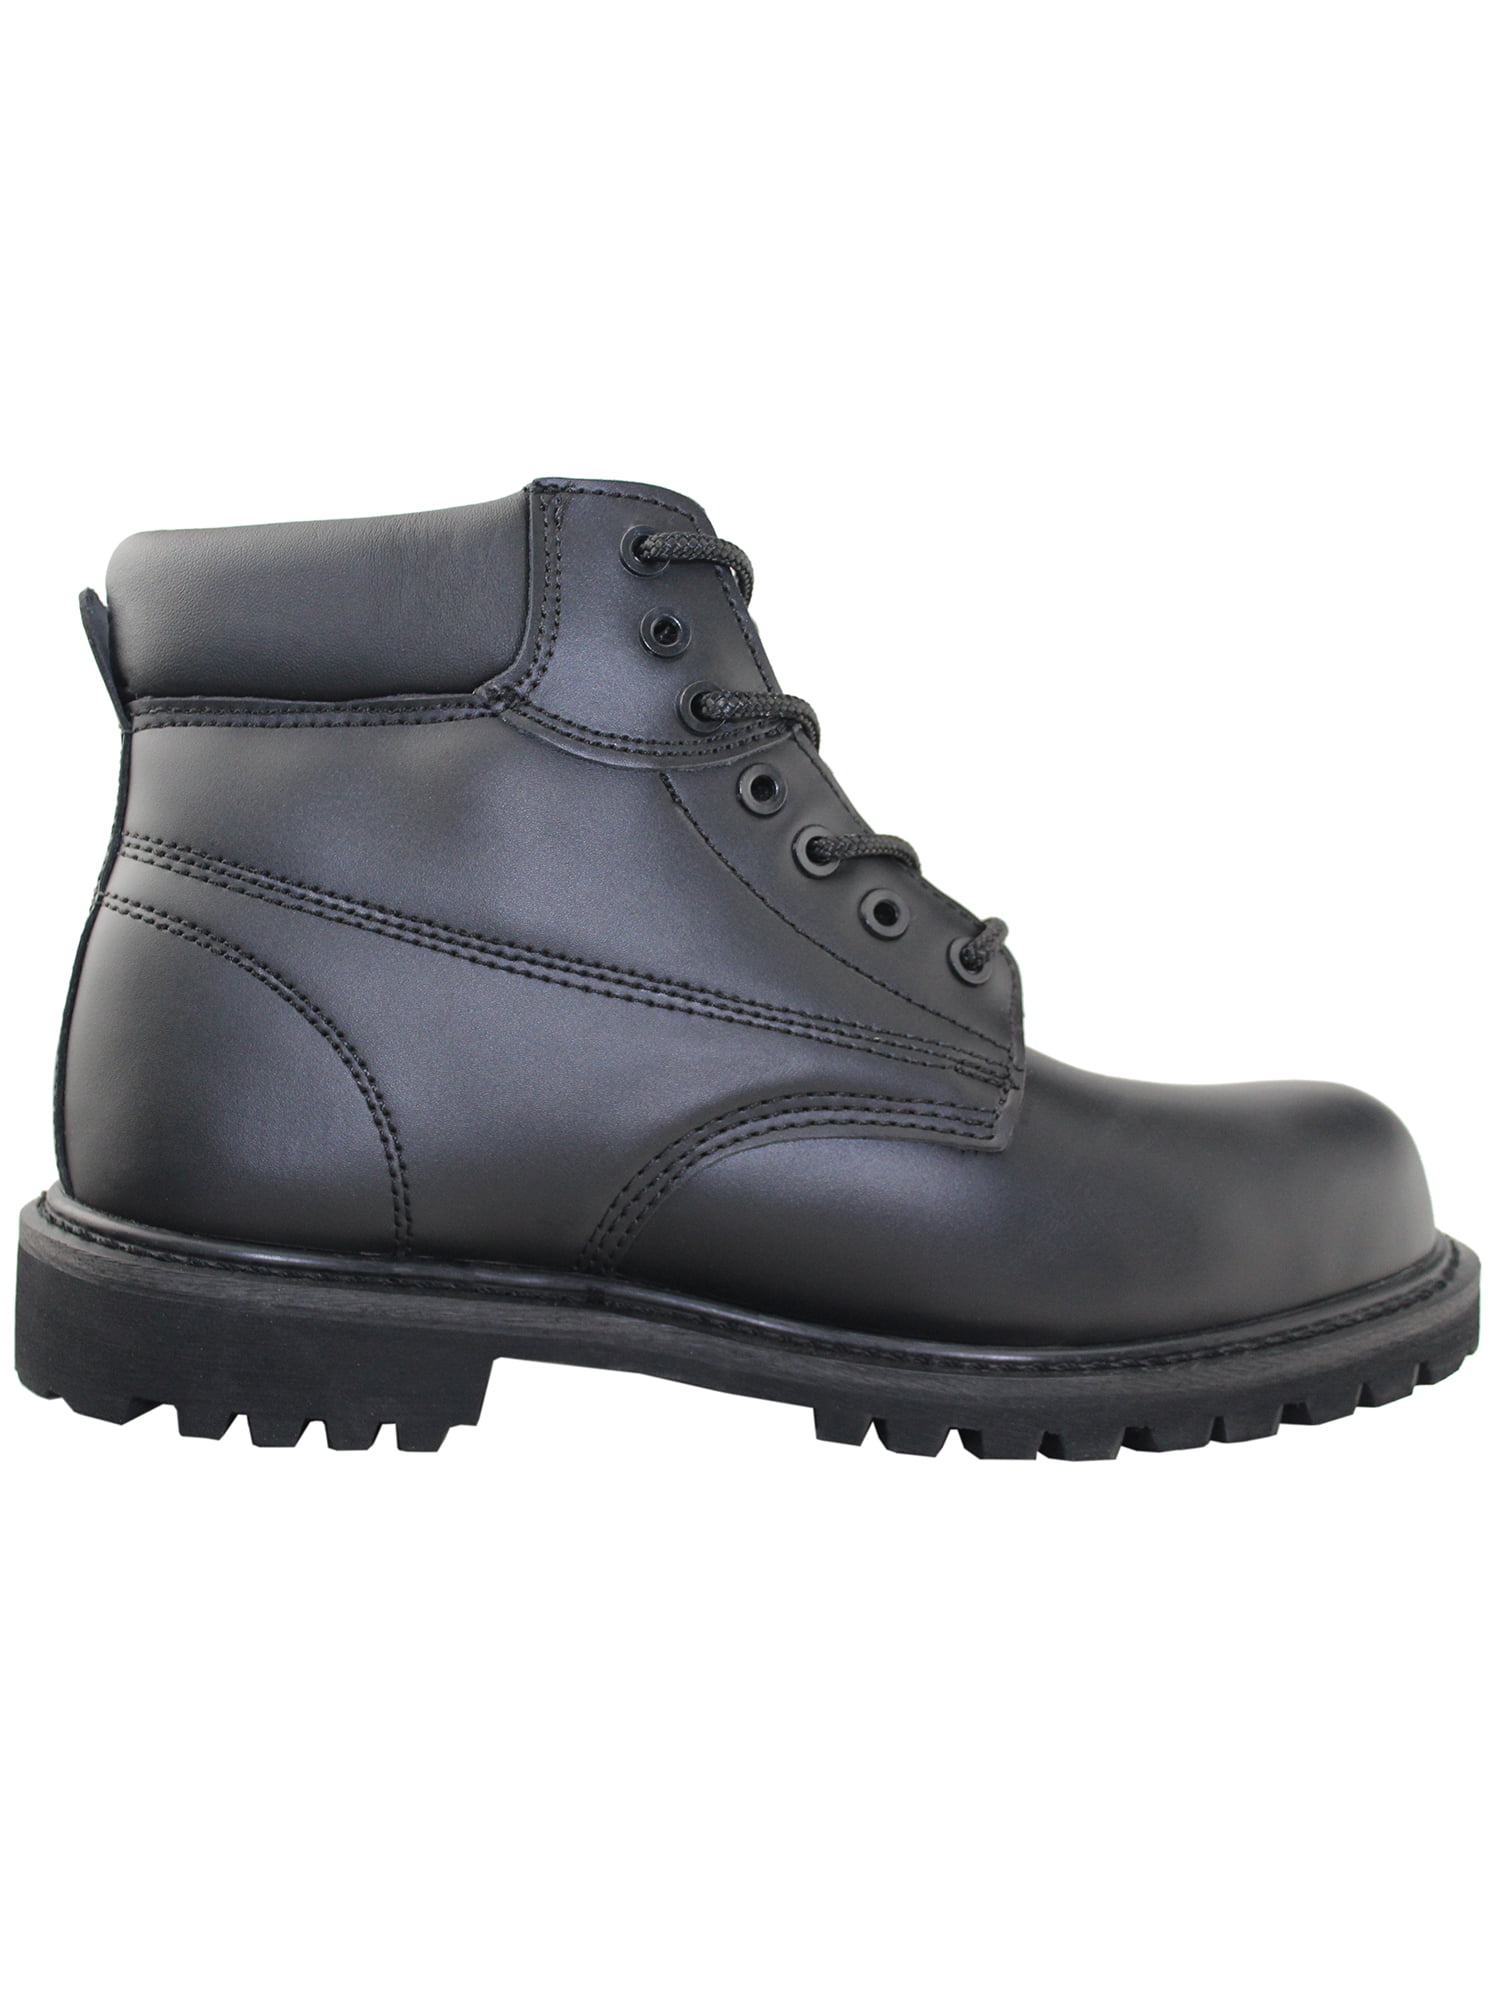 non slip oil resistant work boots